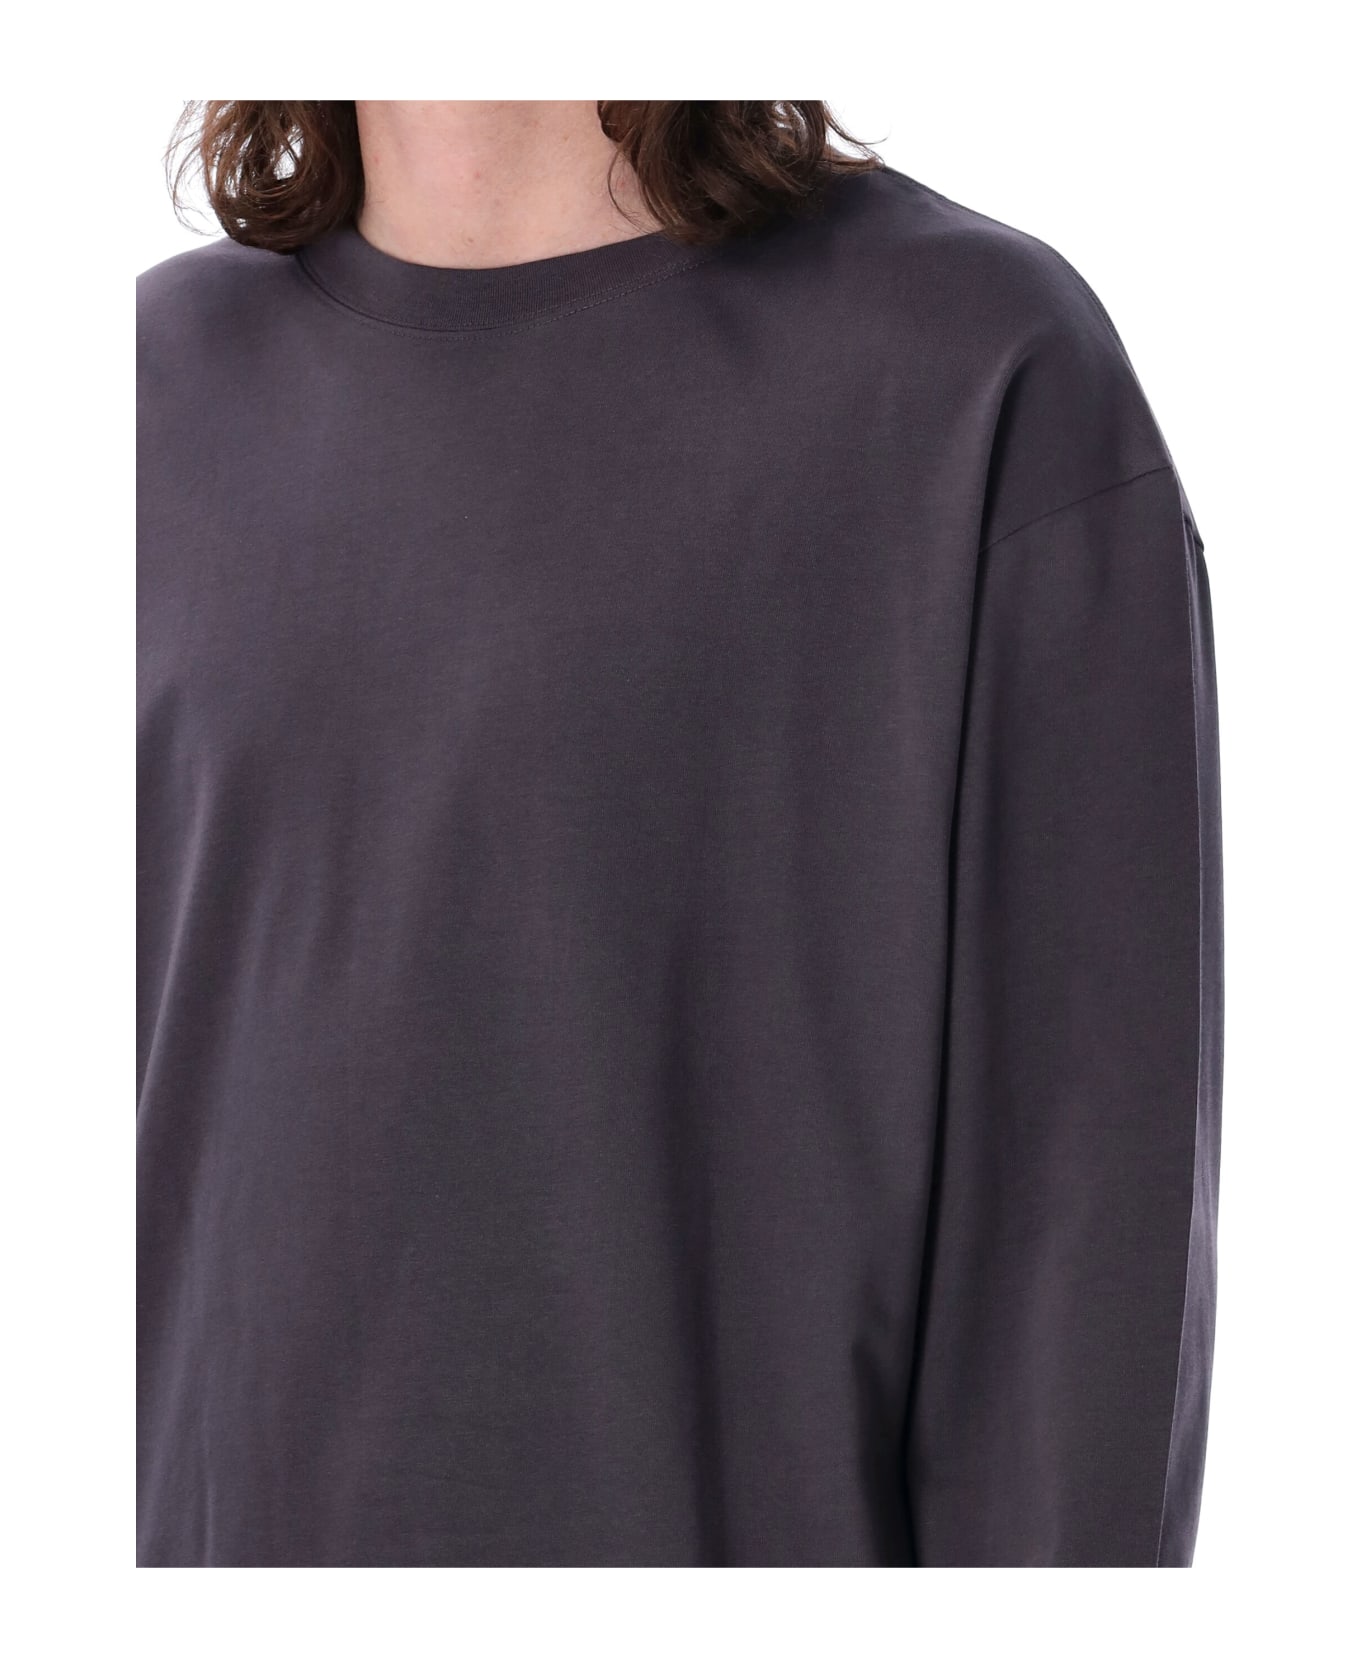 Studio Nicholson Javelin Long Sleeves T-shirt - ASPHALT